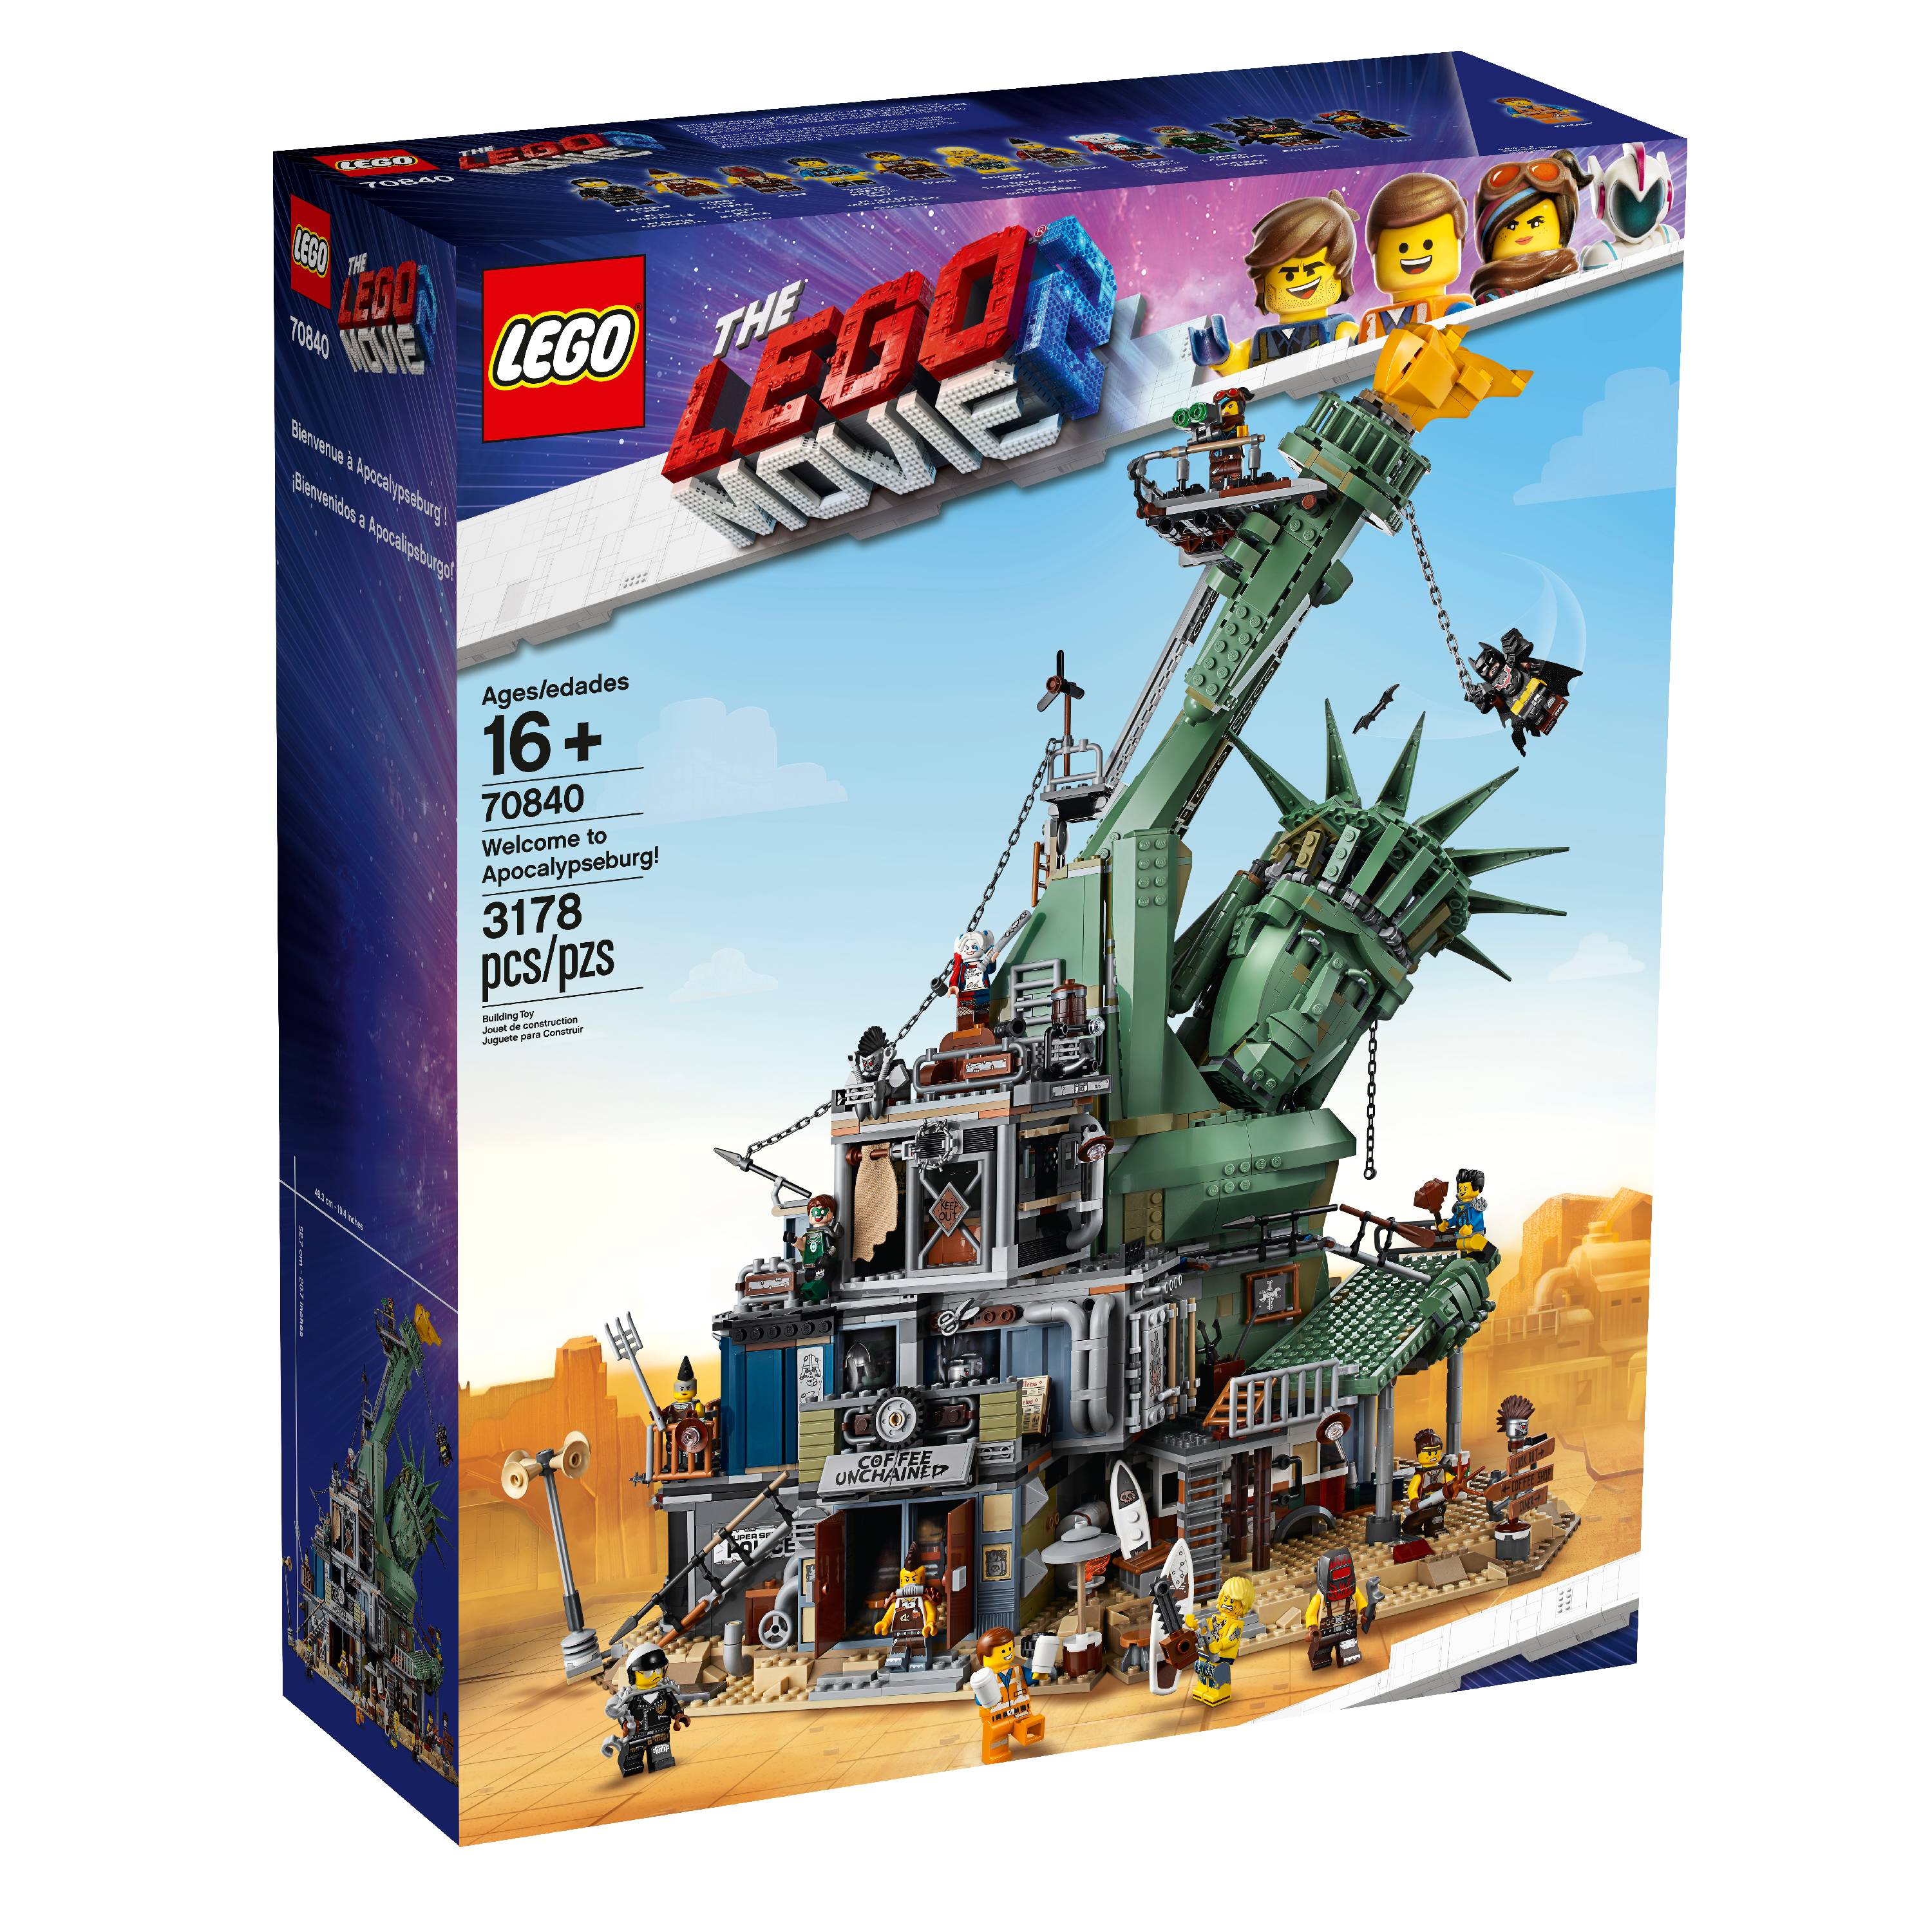 The LEGO 2 Movie Welcome to Apocalypseburg! 70840 - image 4 of 7